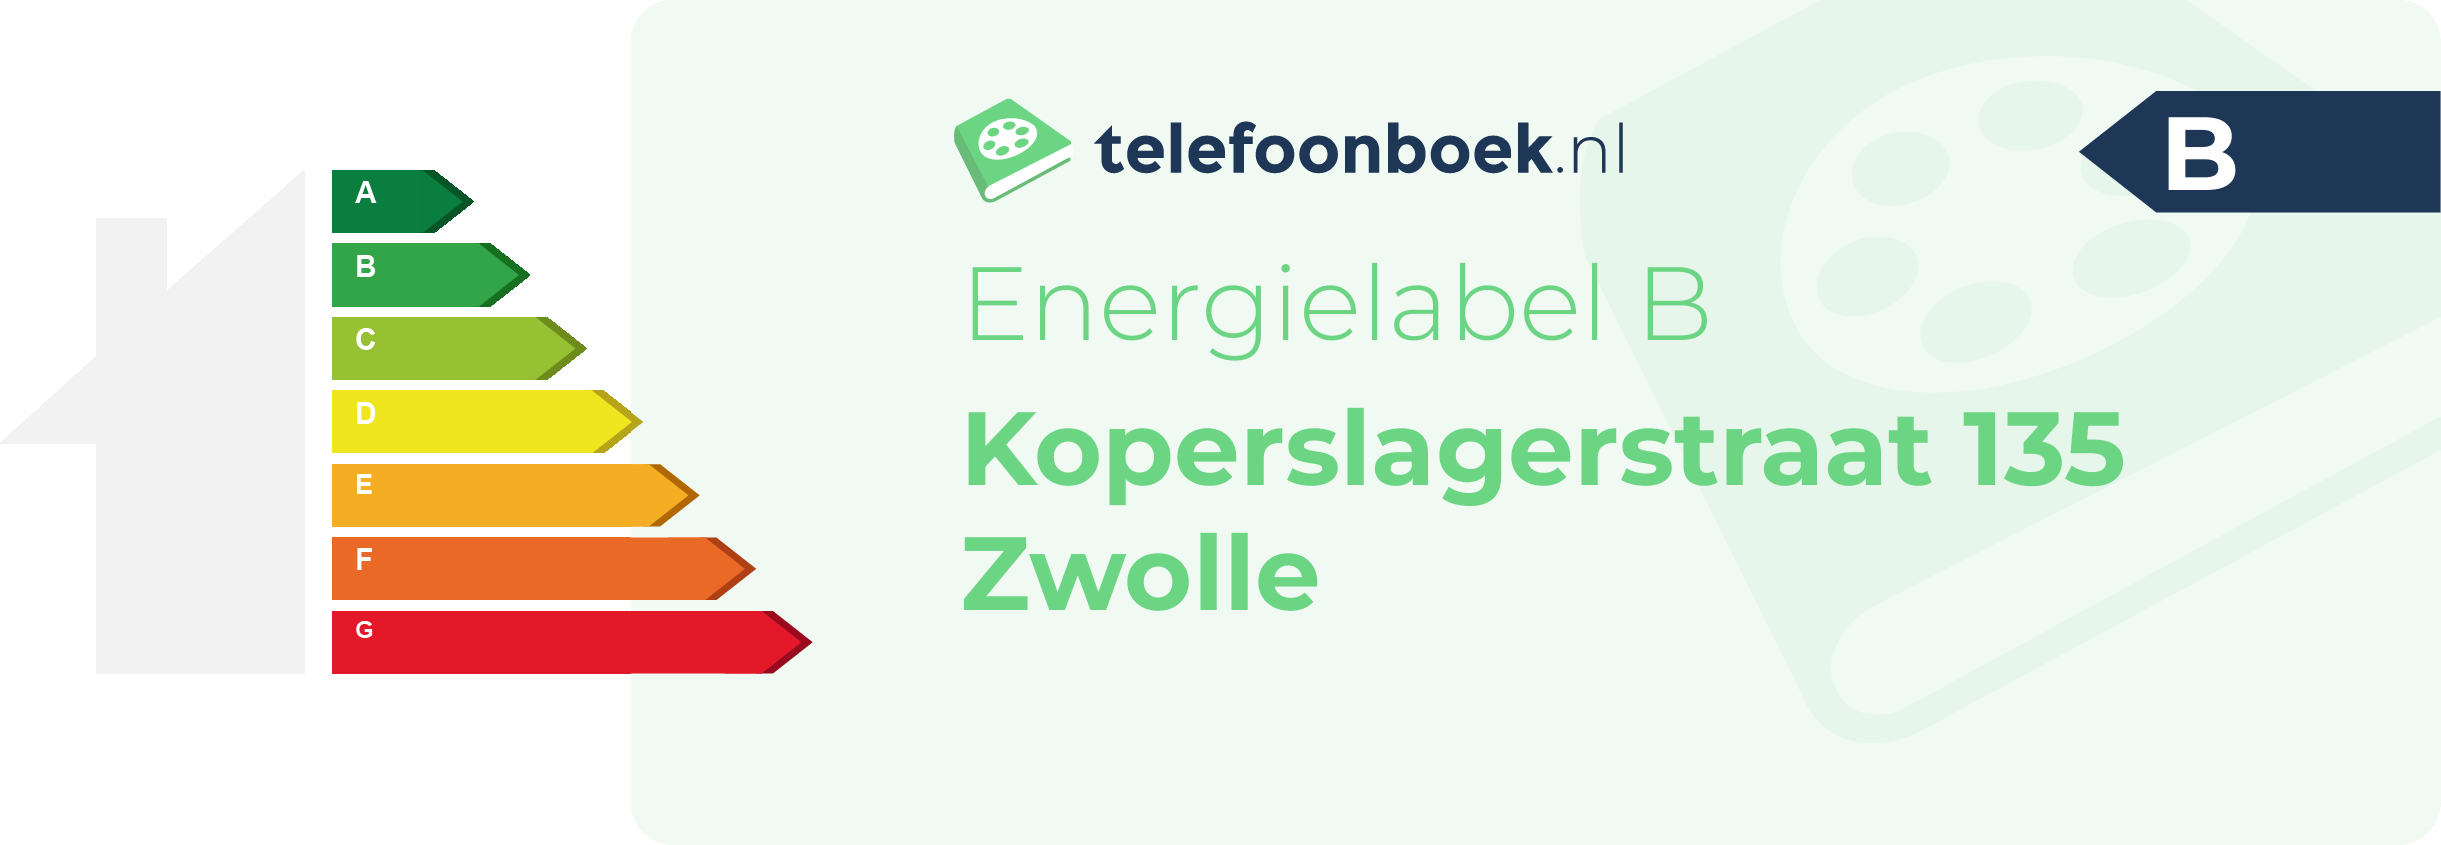 Energielabel Koperslagerstraat 135 Zwolle